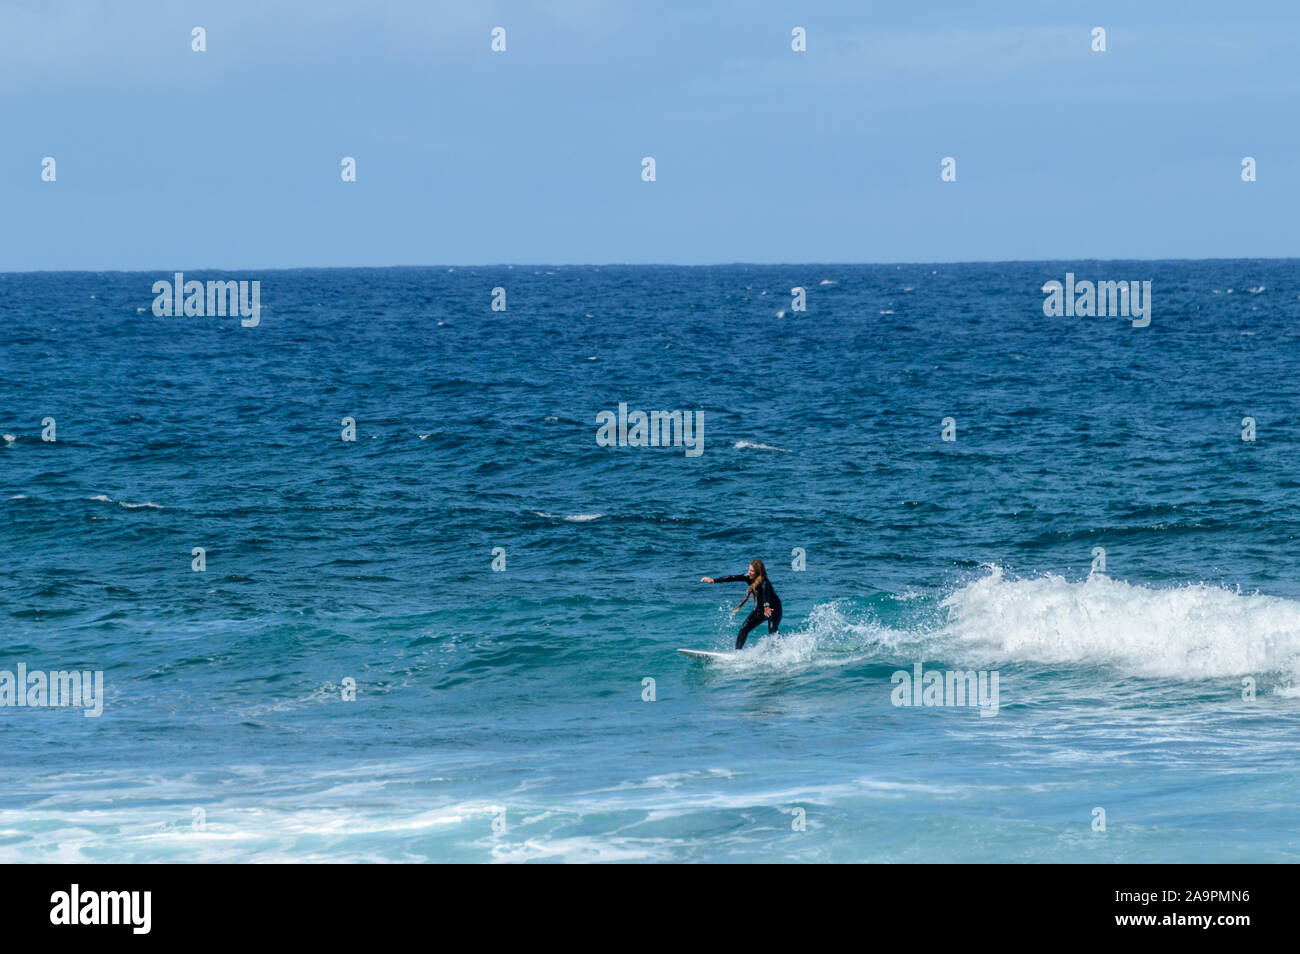 Caucasian Surfer With Dreadlocks Blonde Hair Catching Waves On Las Americas Beach. April 11, 2019. Santa Cruz De Tenerife Spain Africa. Travel Tourism Stock Photo